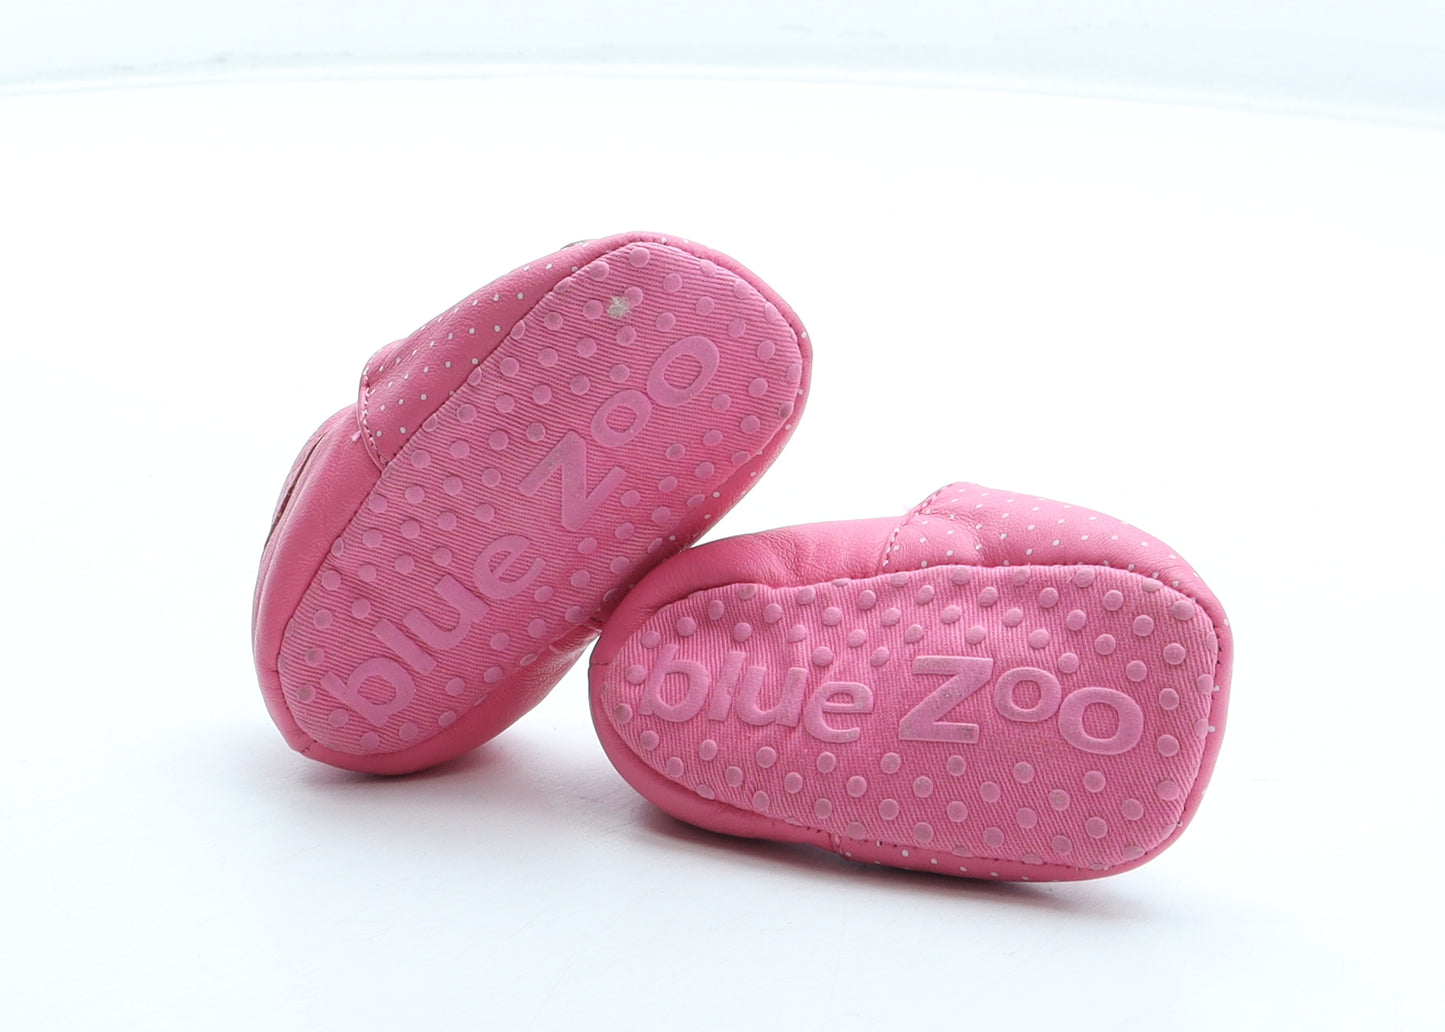 Blue Zoo Girls Pink Polka Dot Polyurethane Slip On Casual UK 0-6 Months - Rabbit